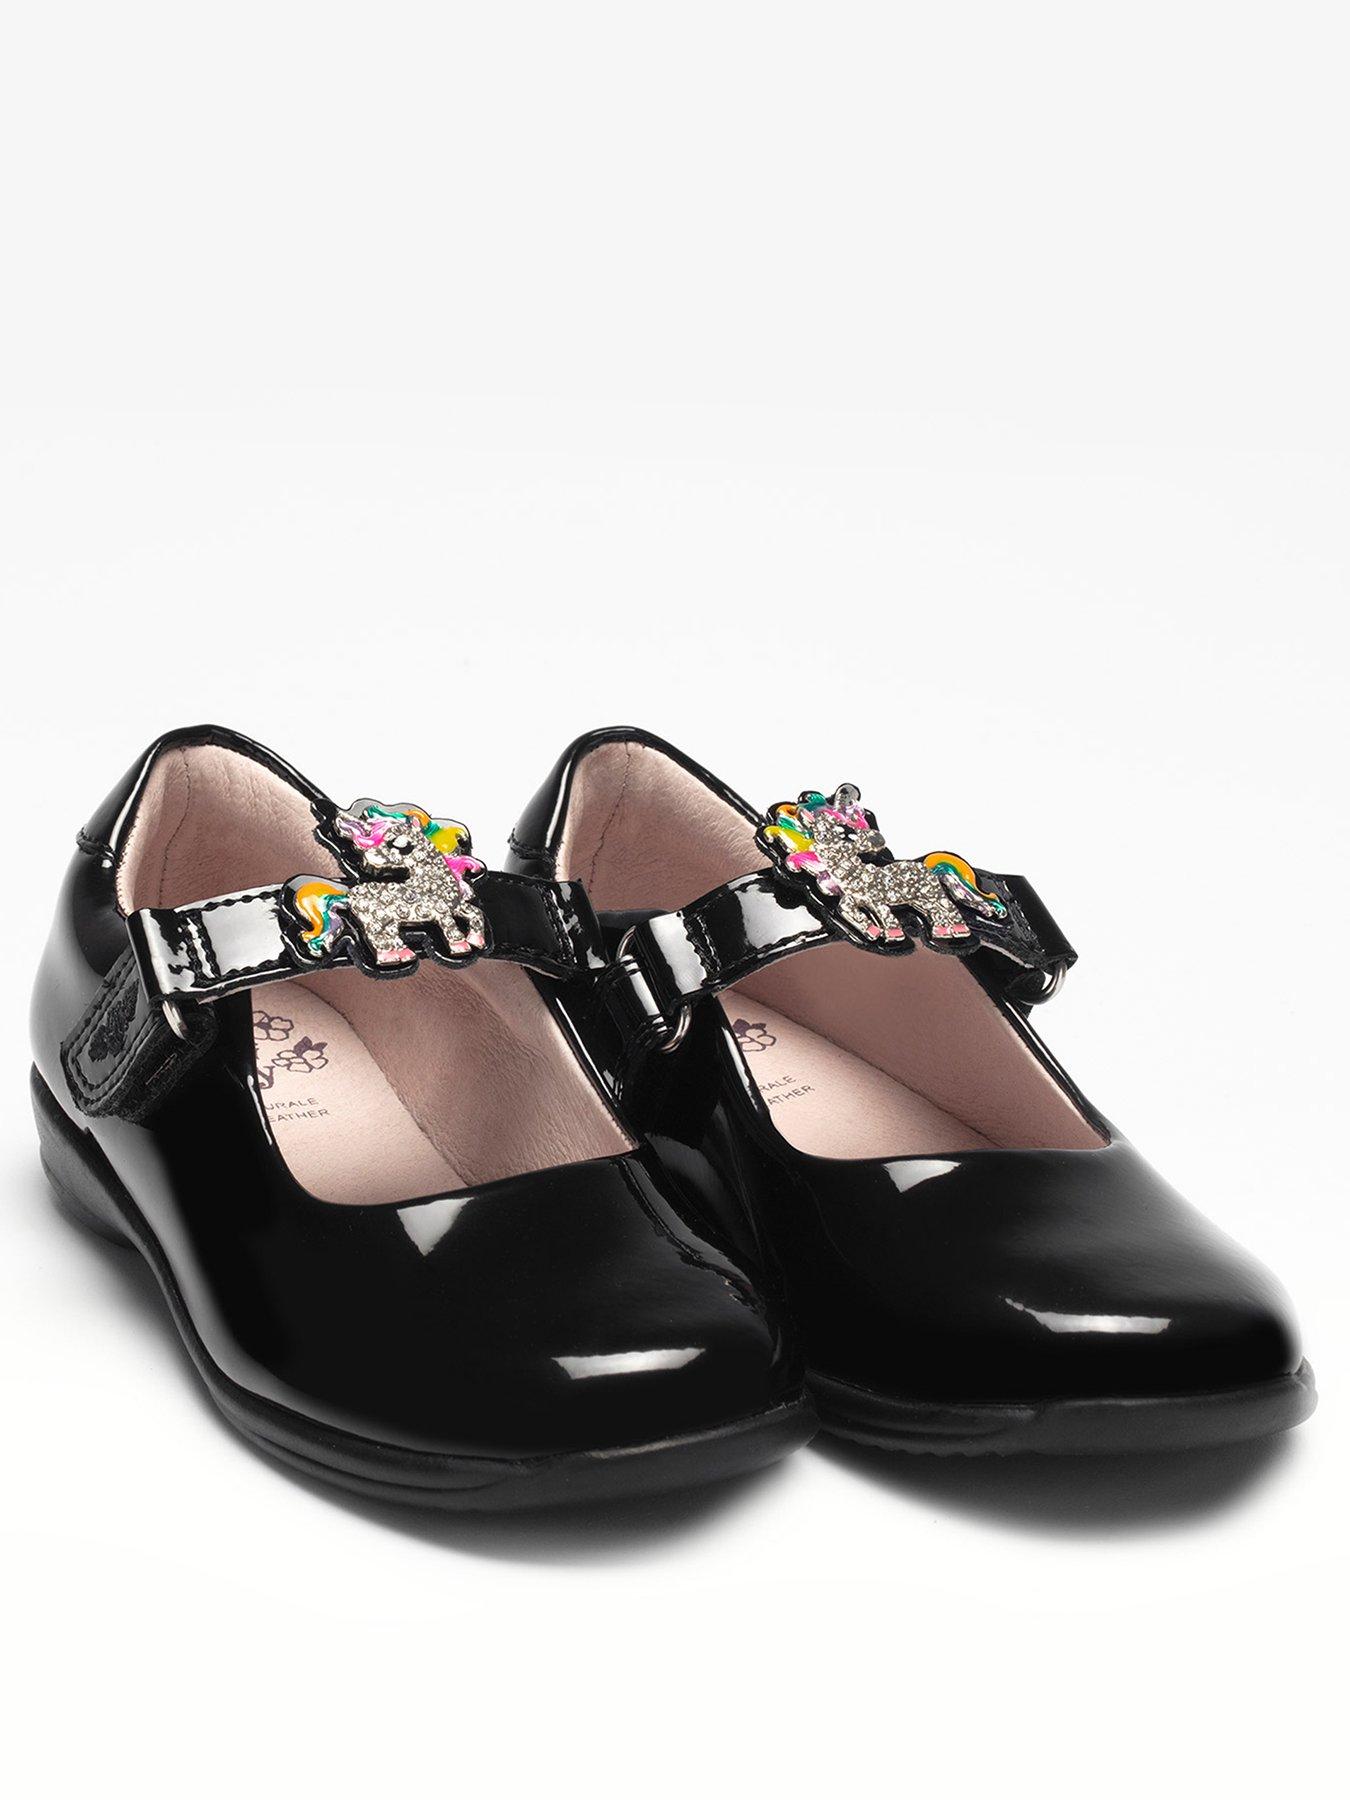 Shoes & boots Girls Bonnie Unicorn Dolly School Shoe - Black